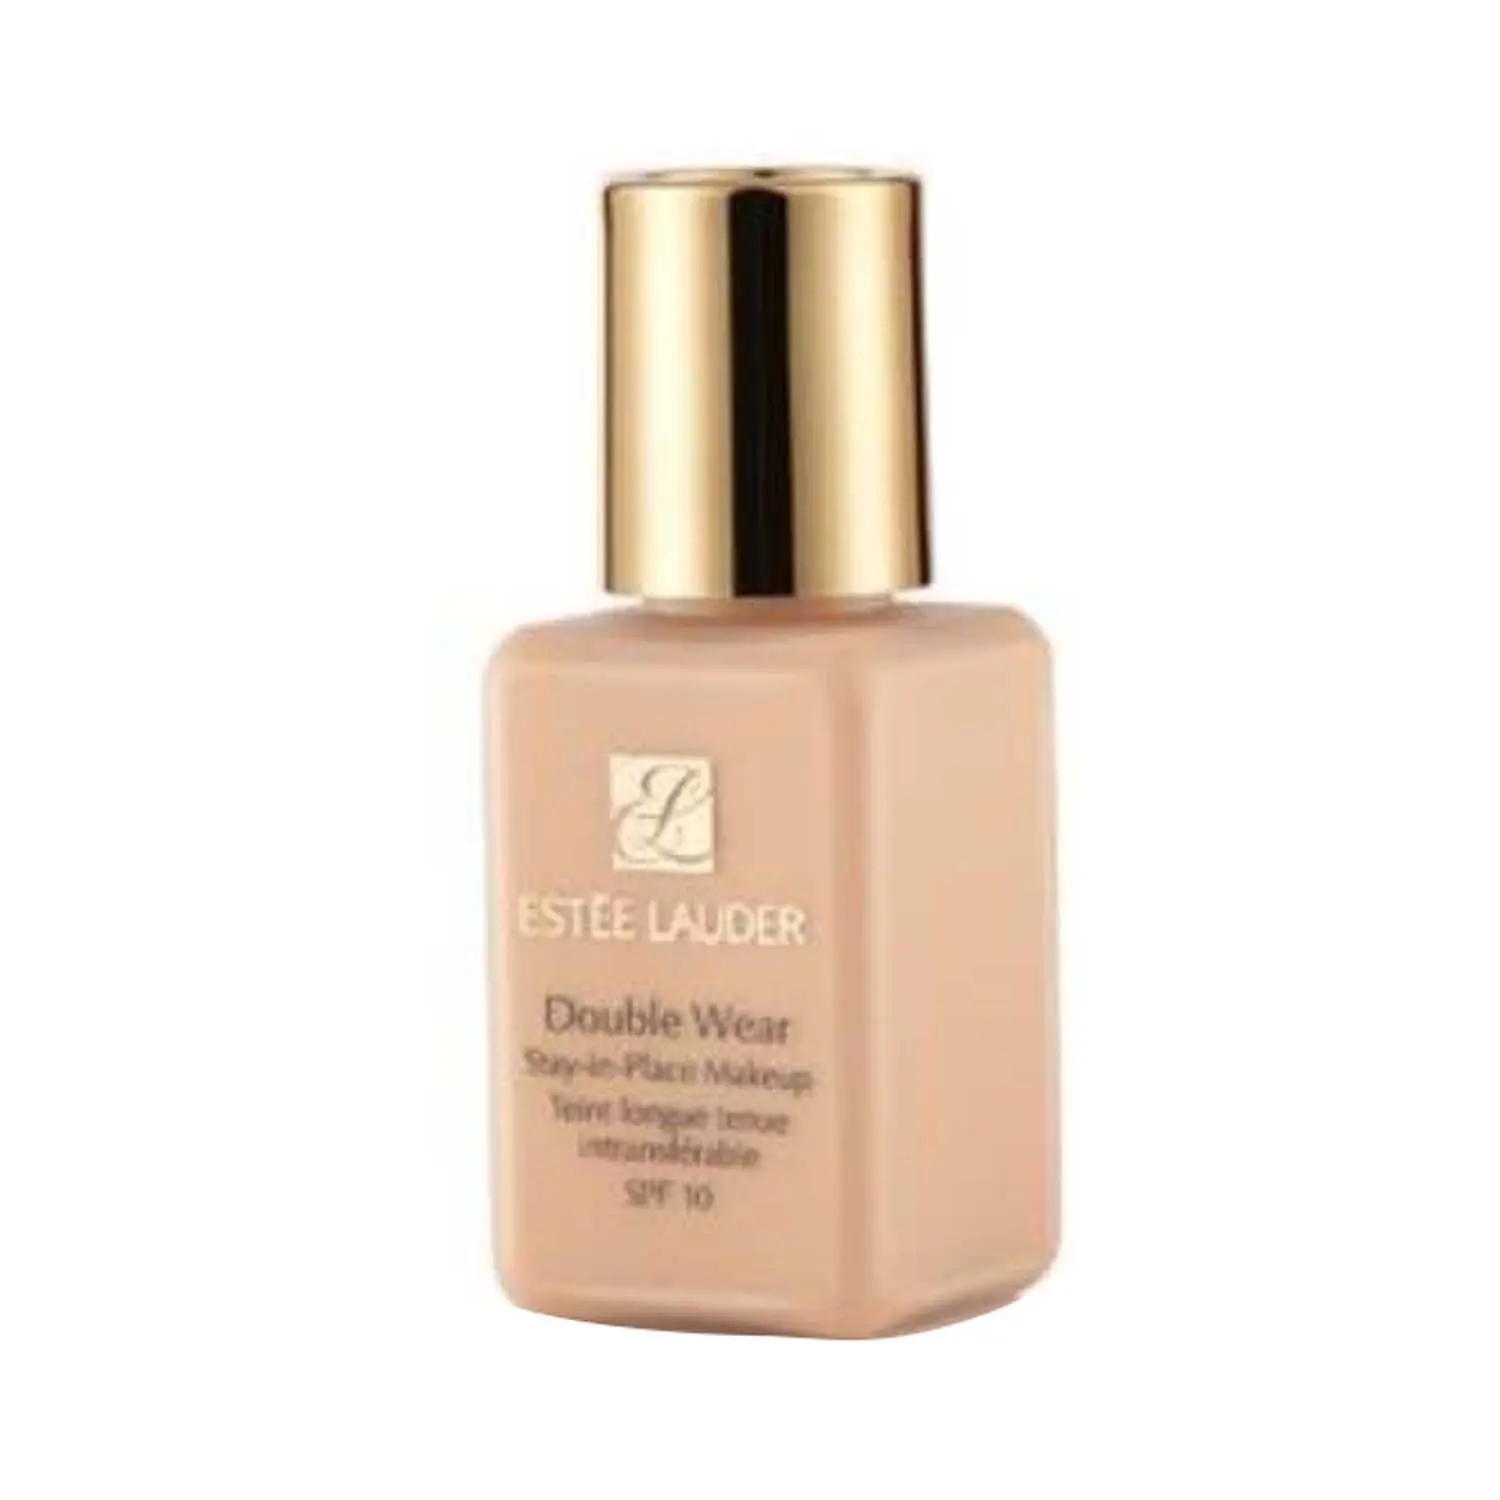 Estee Lauder | Estee Lauder Double Wear Stay-In-Place Makeup Foundation SPF 10 - 1W2 Sand (15ml)